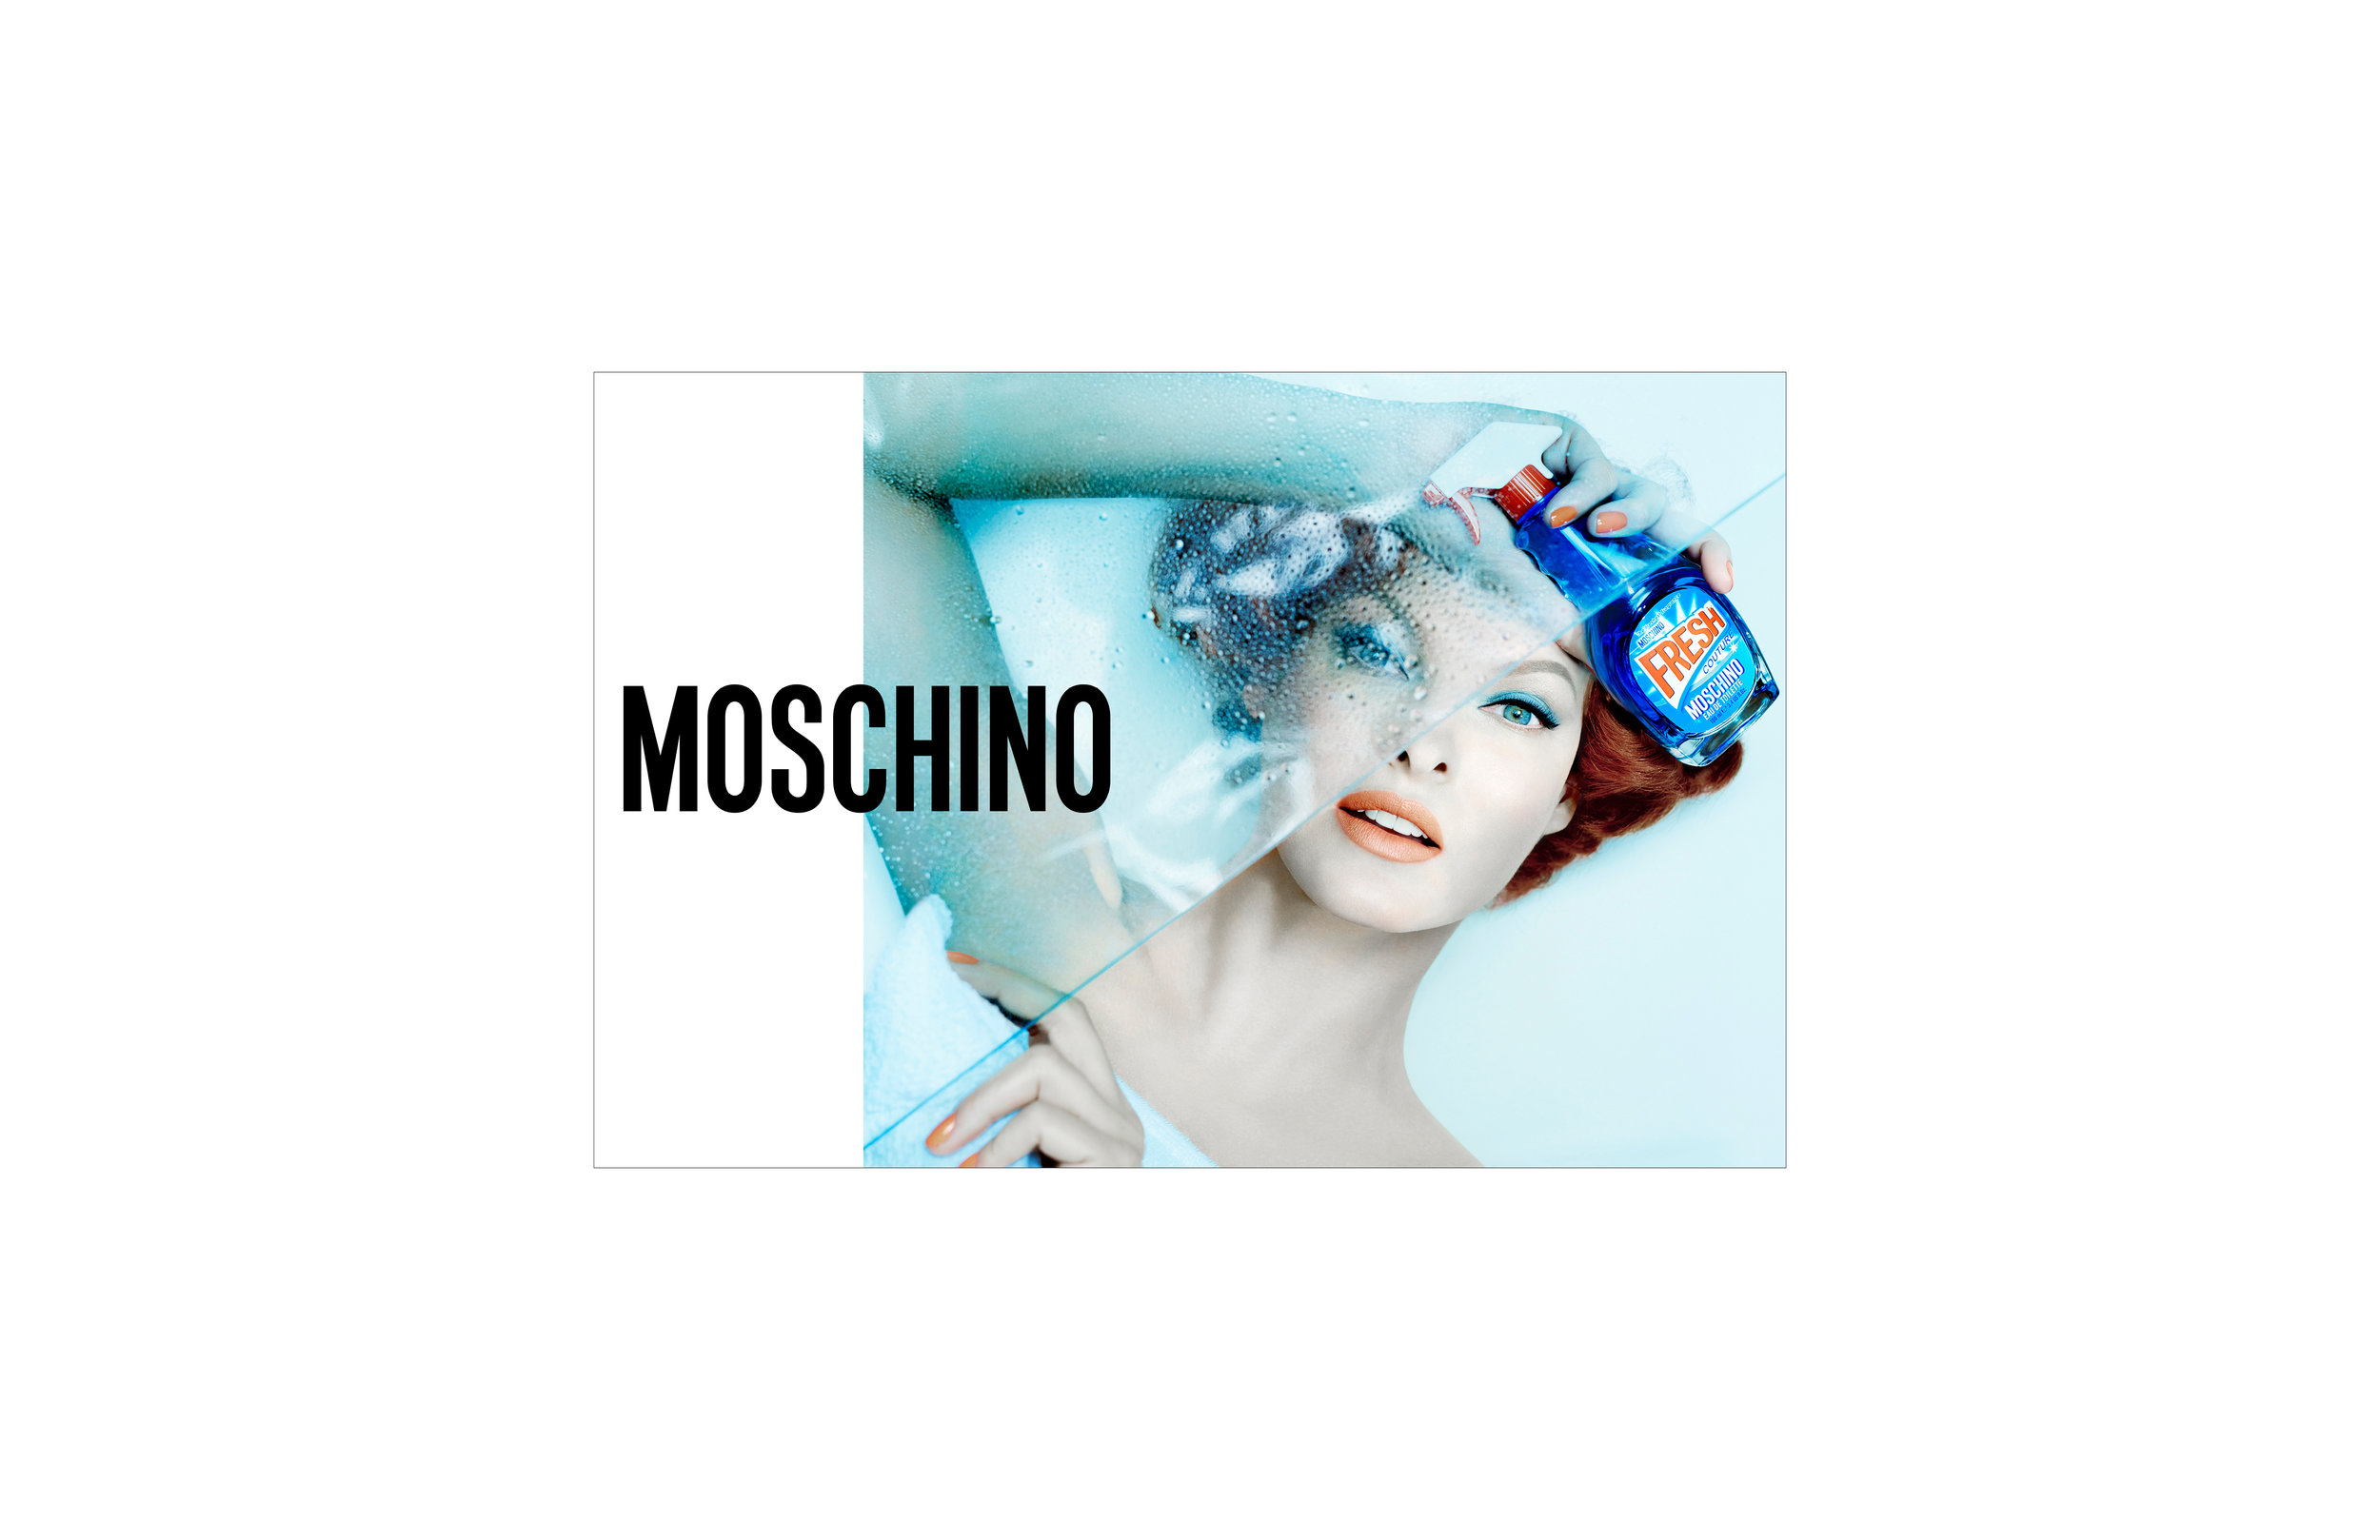  Moschino Fresh Fragrance, 2015 